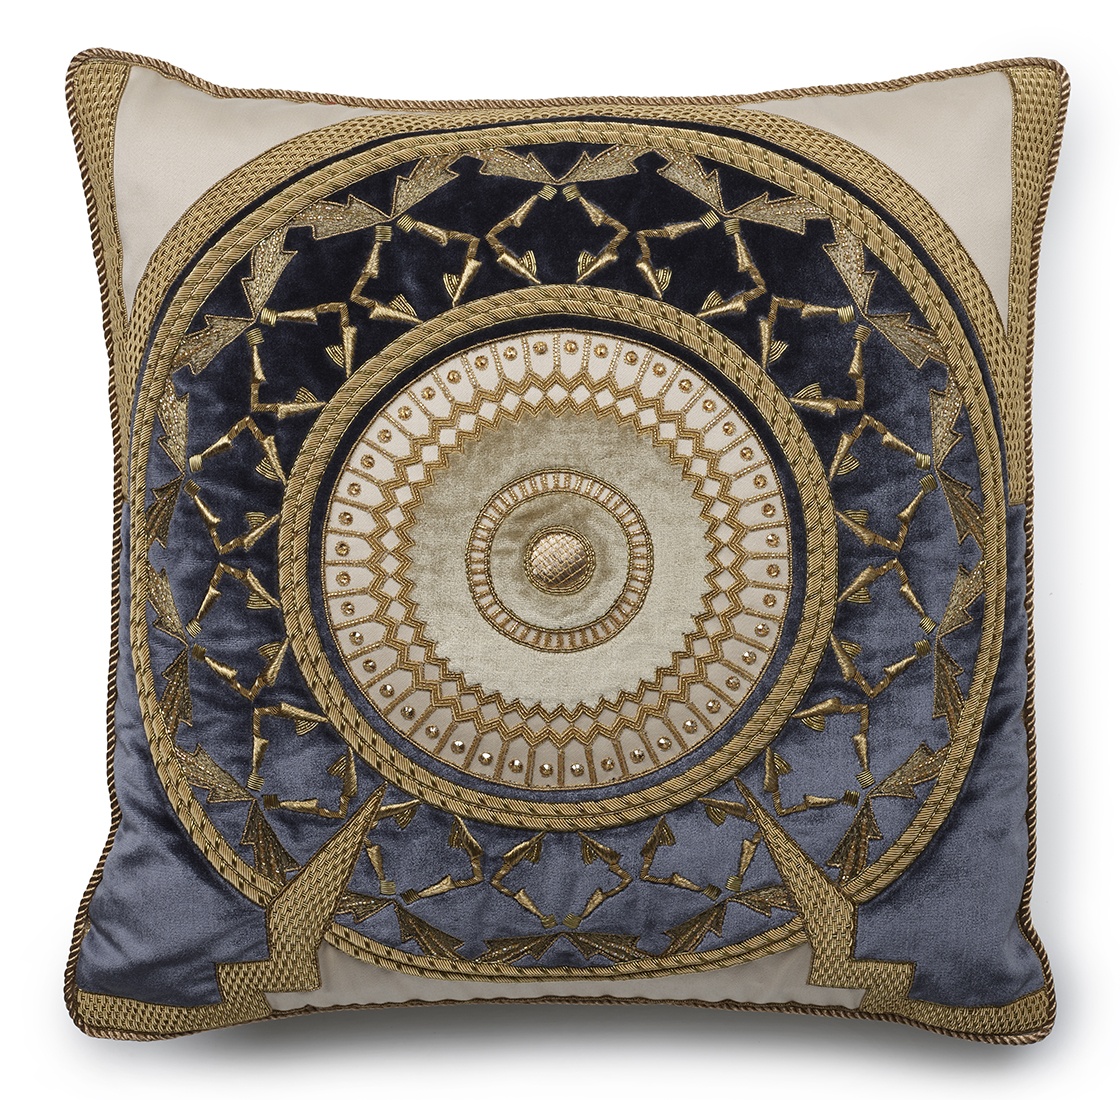 Ettore cushion in Capri silk velvet - Charcoal, Sable - Beaumont & Fletcher